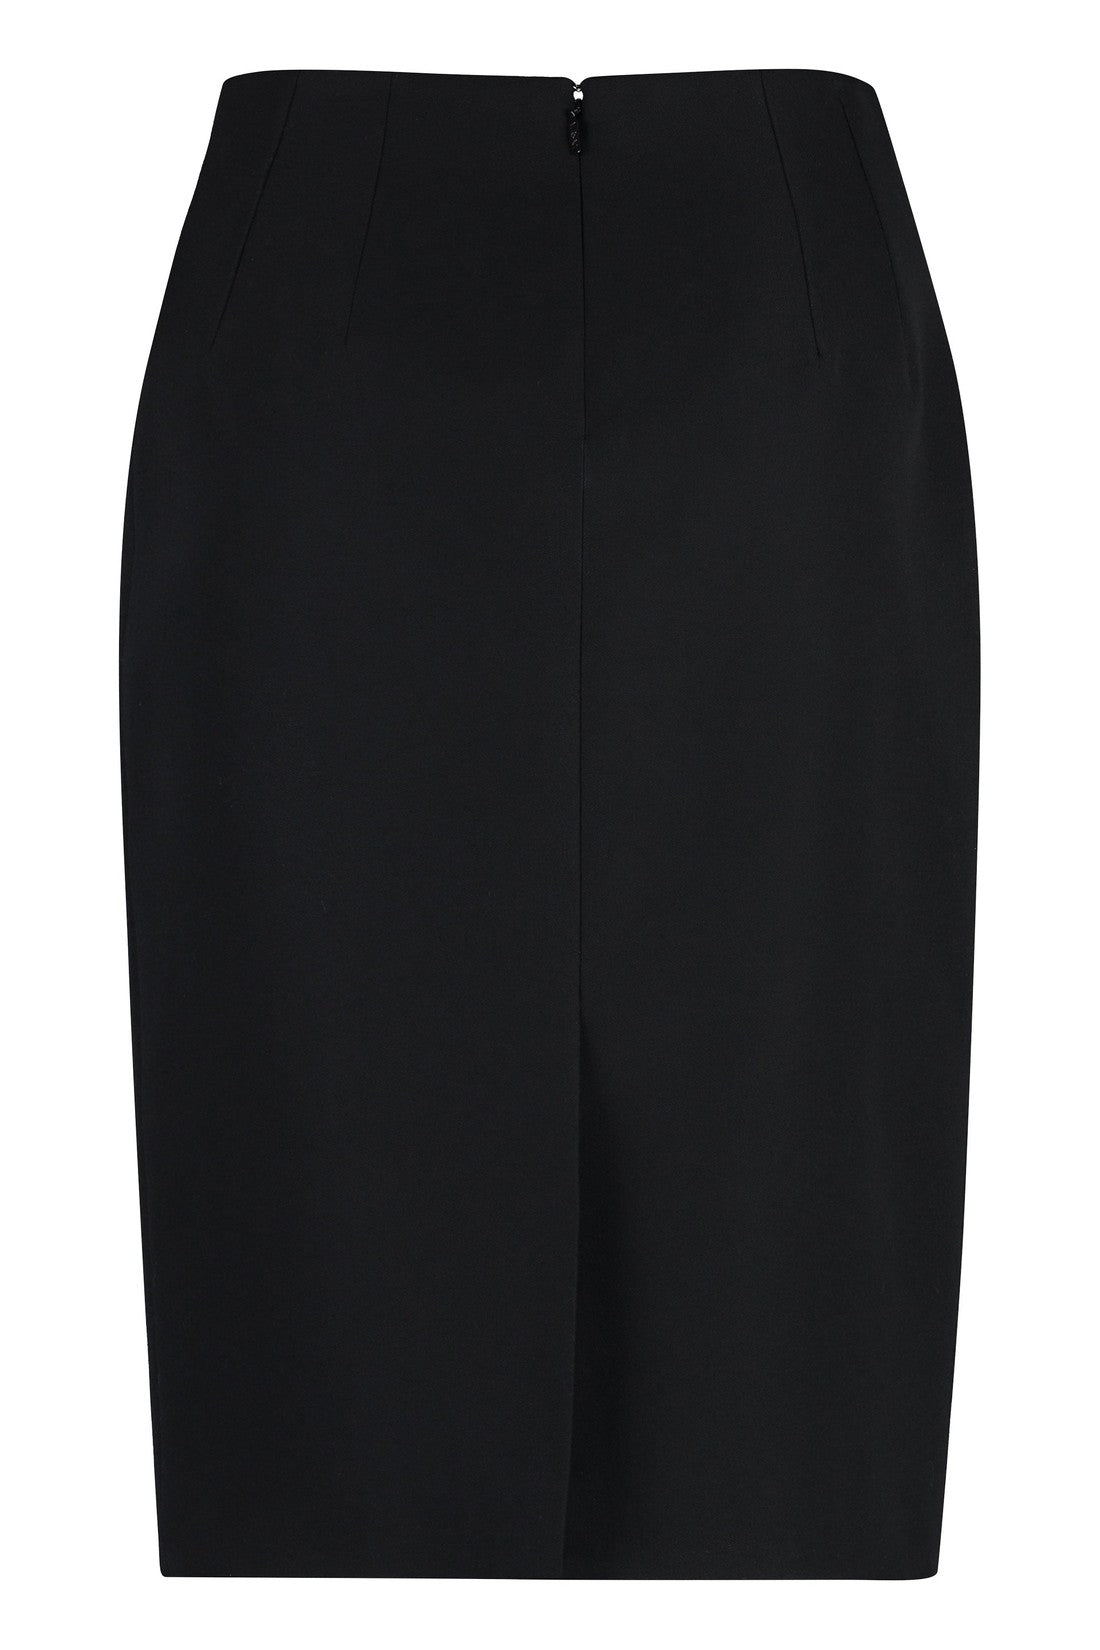 Versace-OUTLET-SALE-Wool pencil skirt-ARCHIVIST